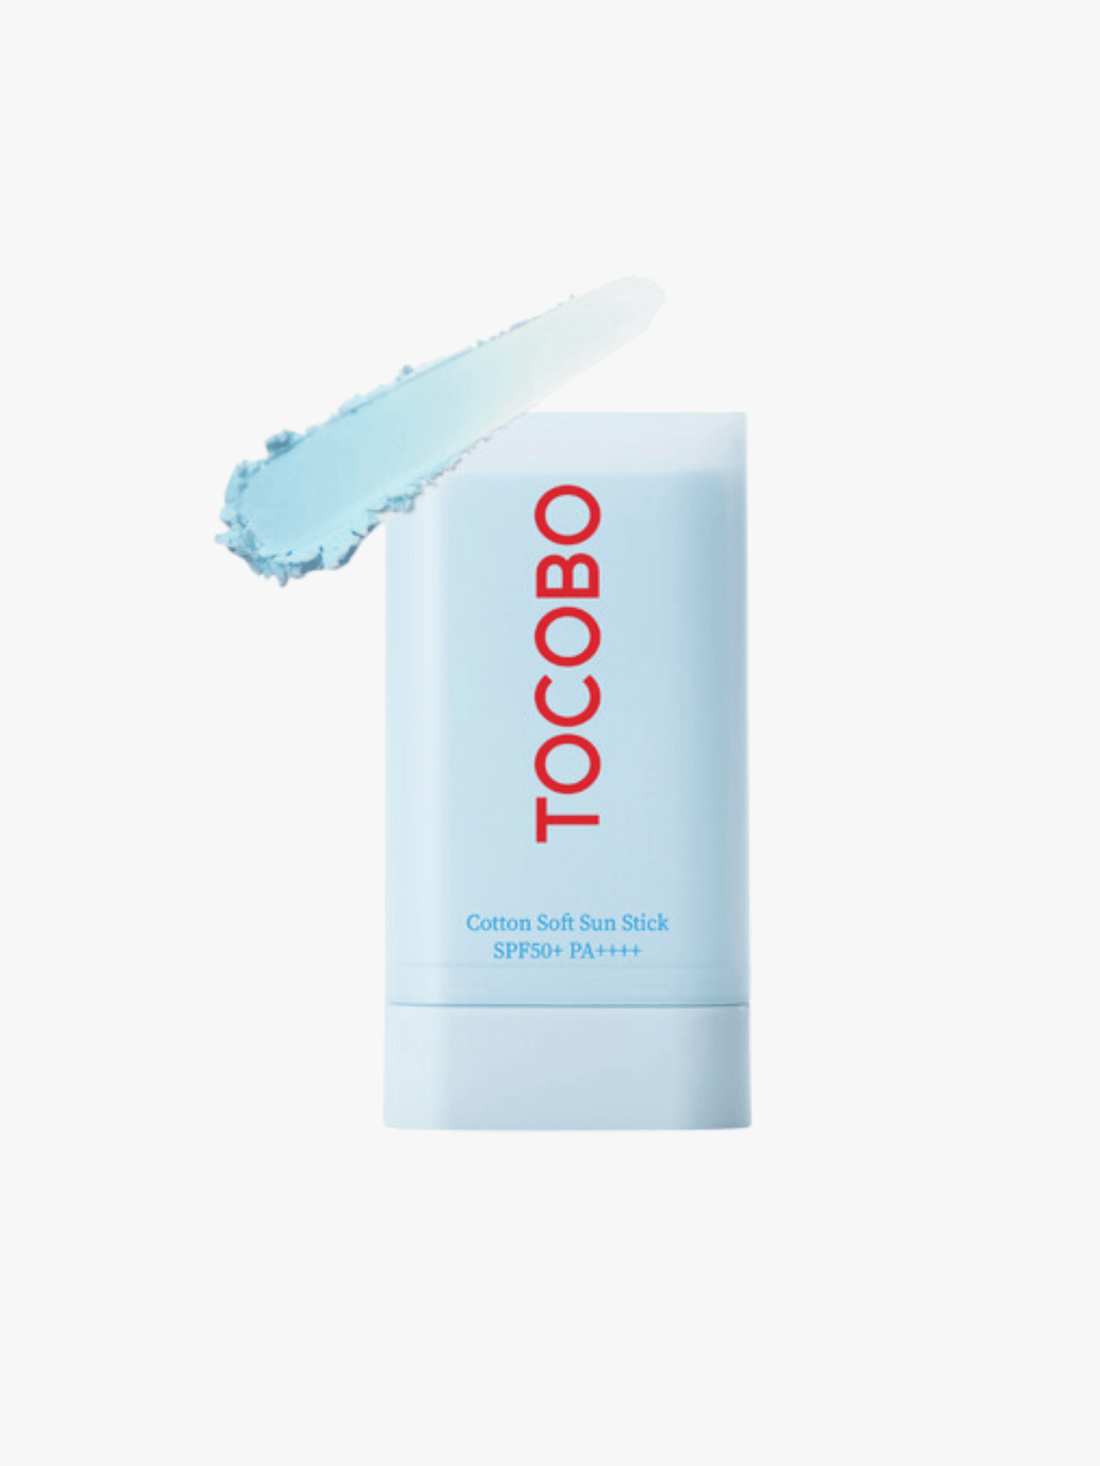 Tocobo - Sun protection - Cotton Soft Sun Stick SPF50+ PA++++